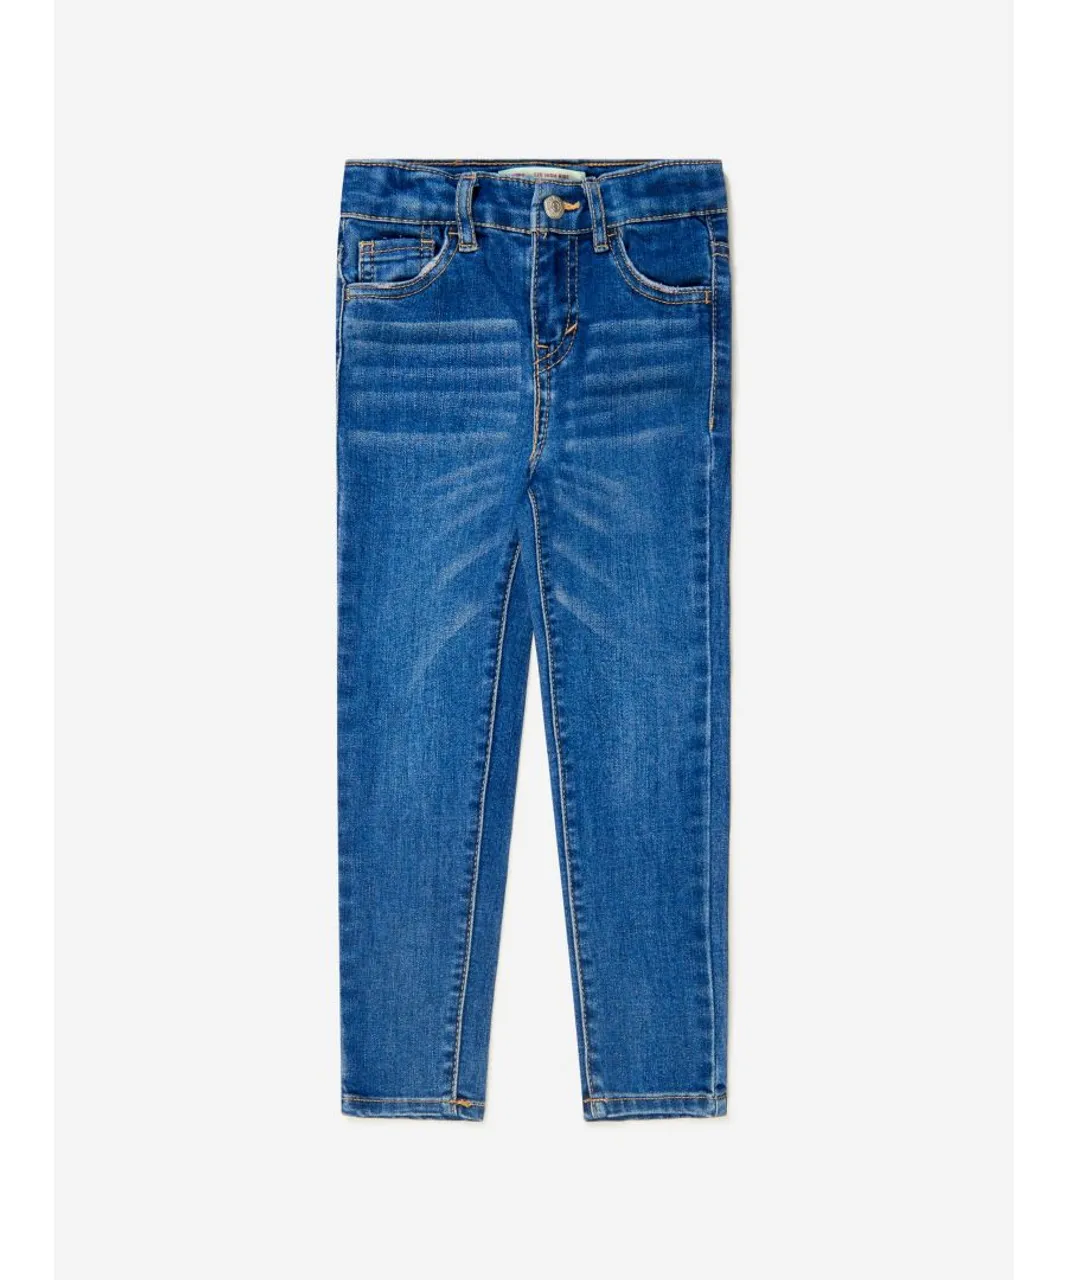 Levi's Kids Wear Girls High Rise Super Skinny 720 Jeans - Blue